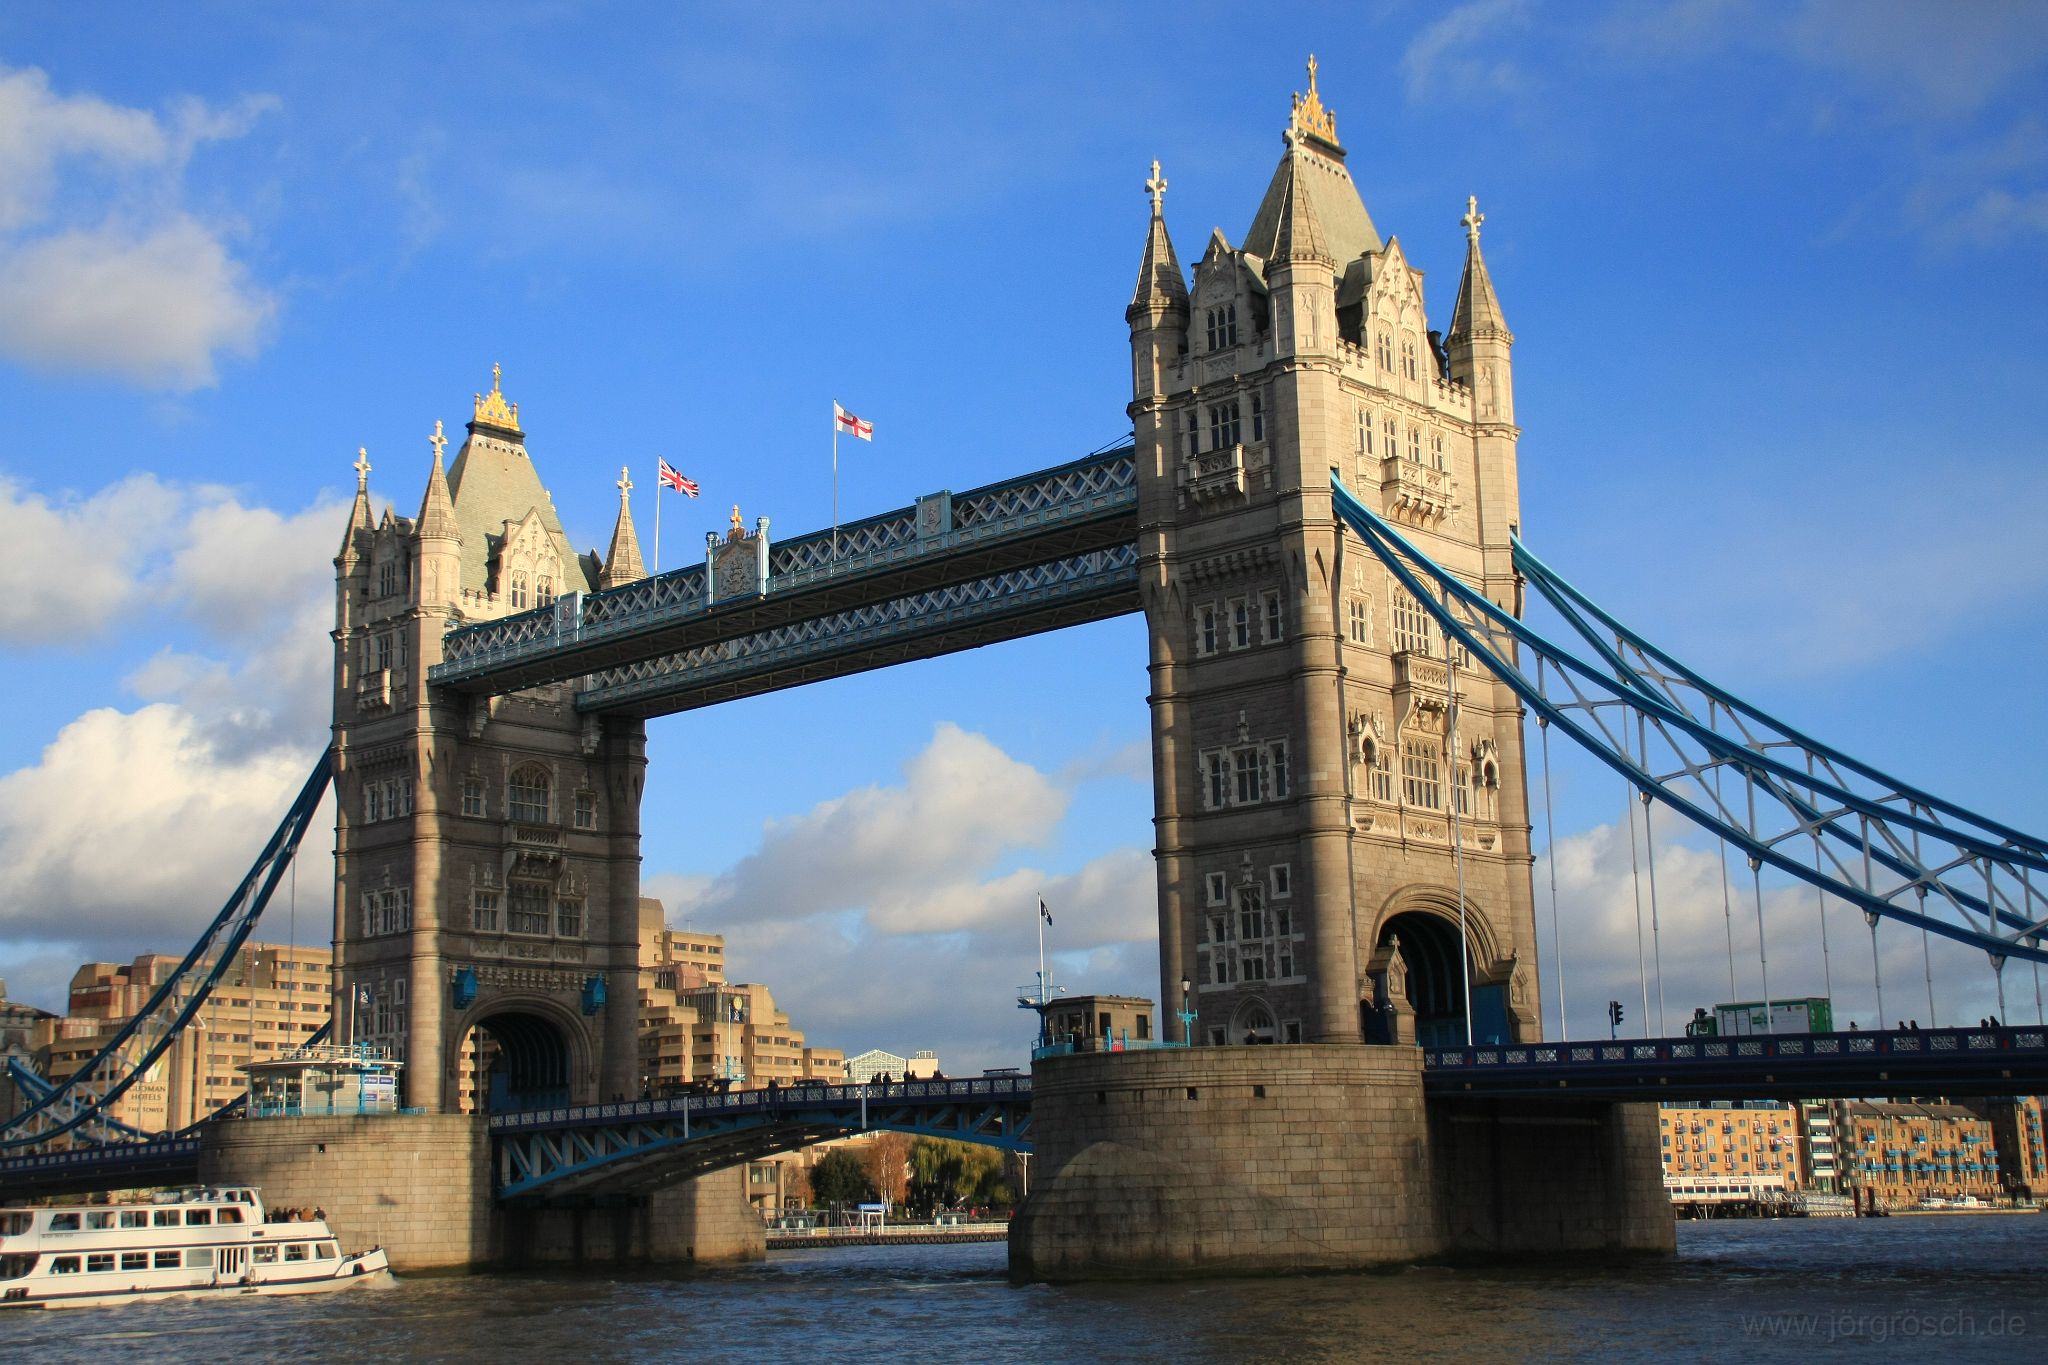 20141208-towerbridge.jpg - Tower Bridge